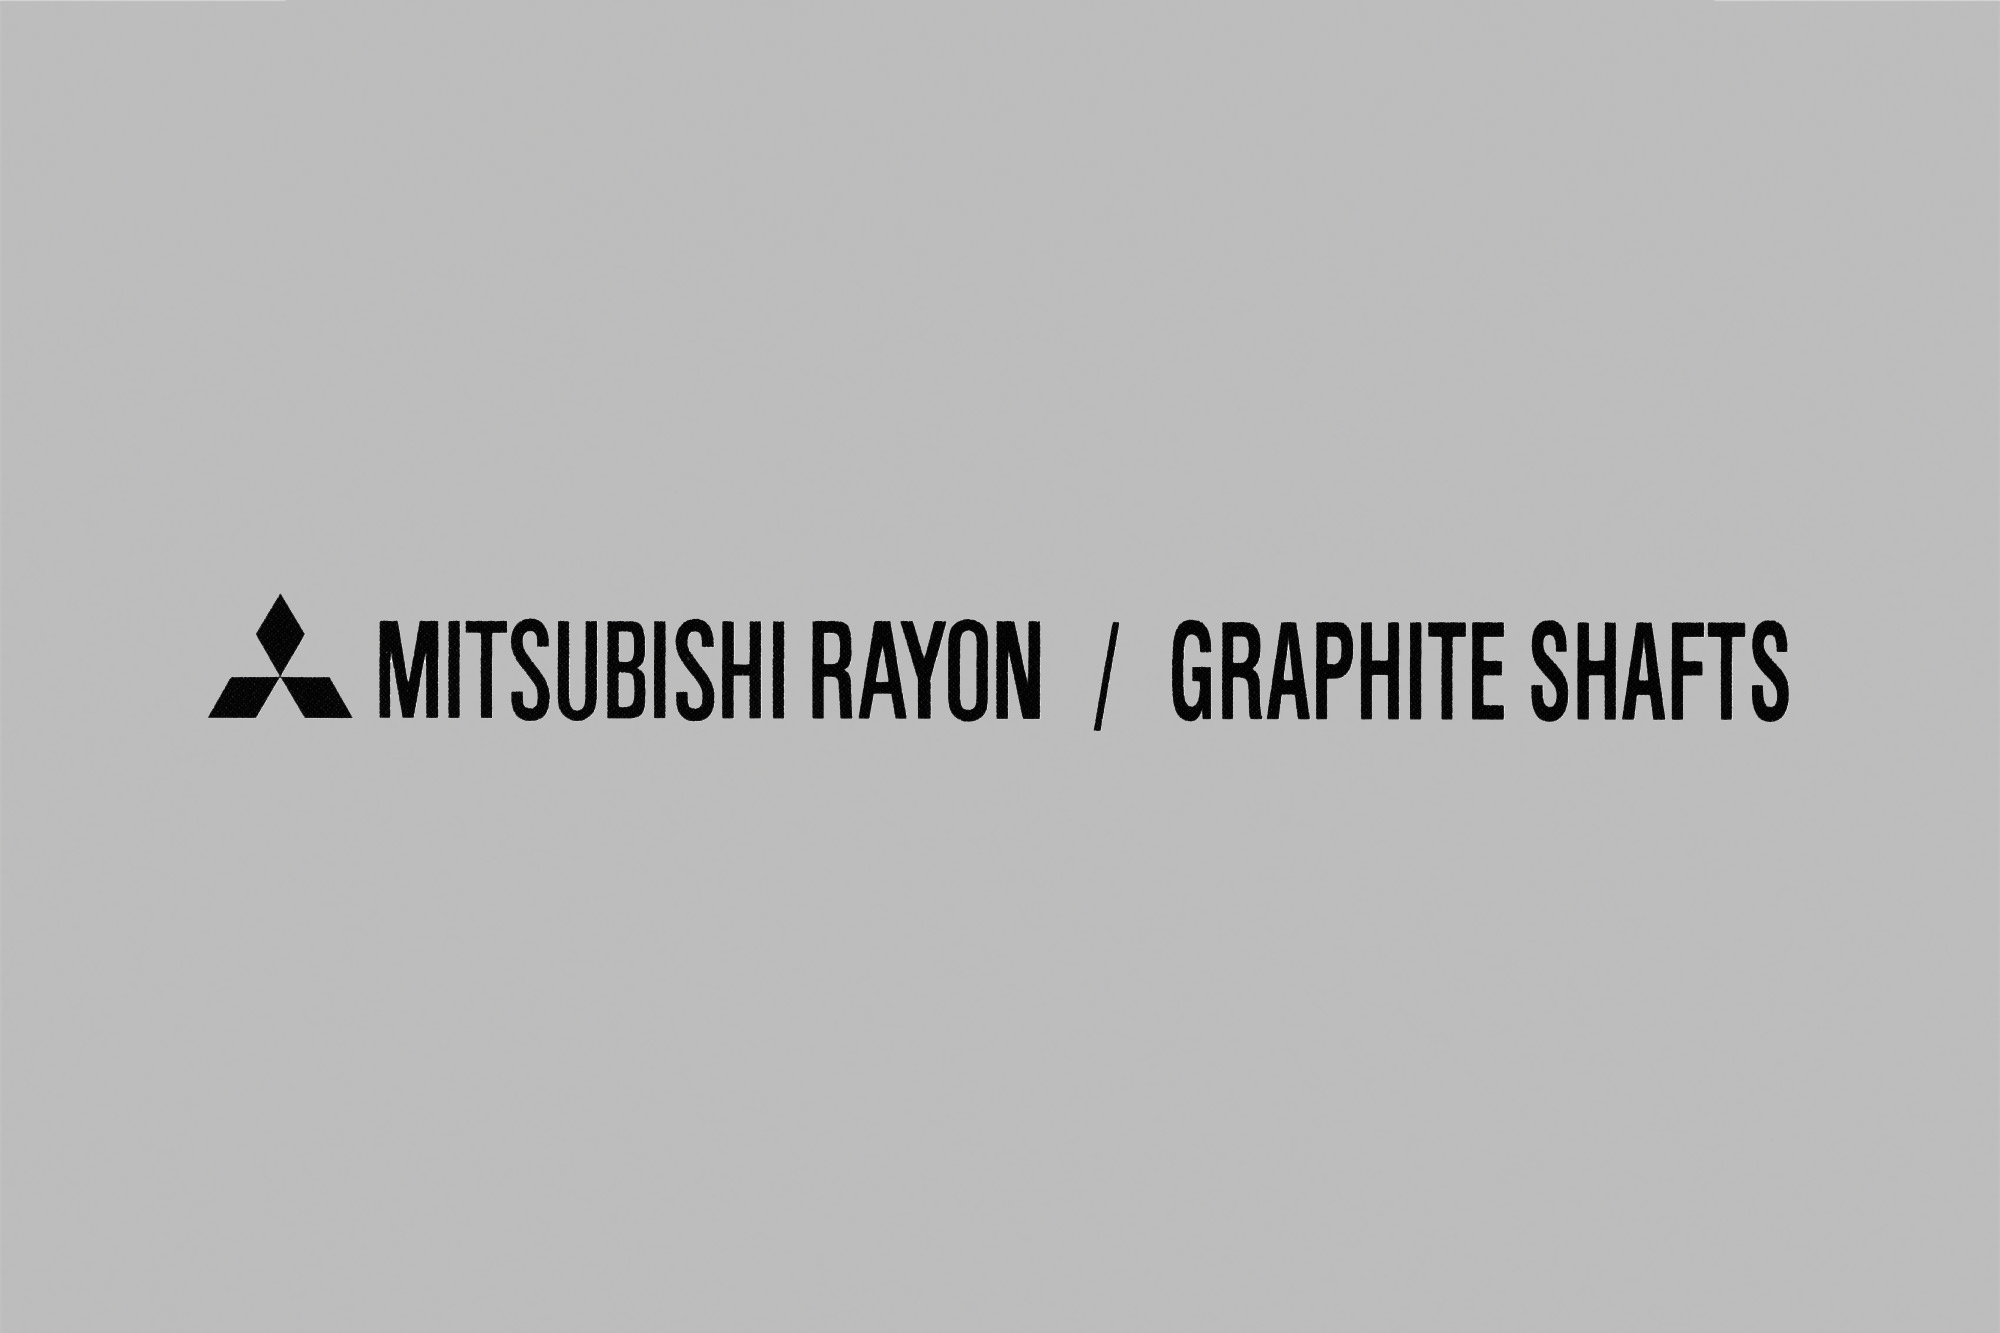 Mitsubishi Rayon